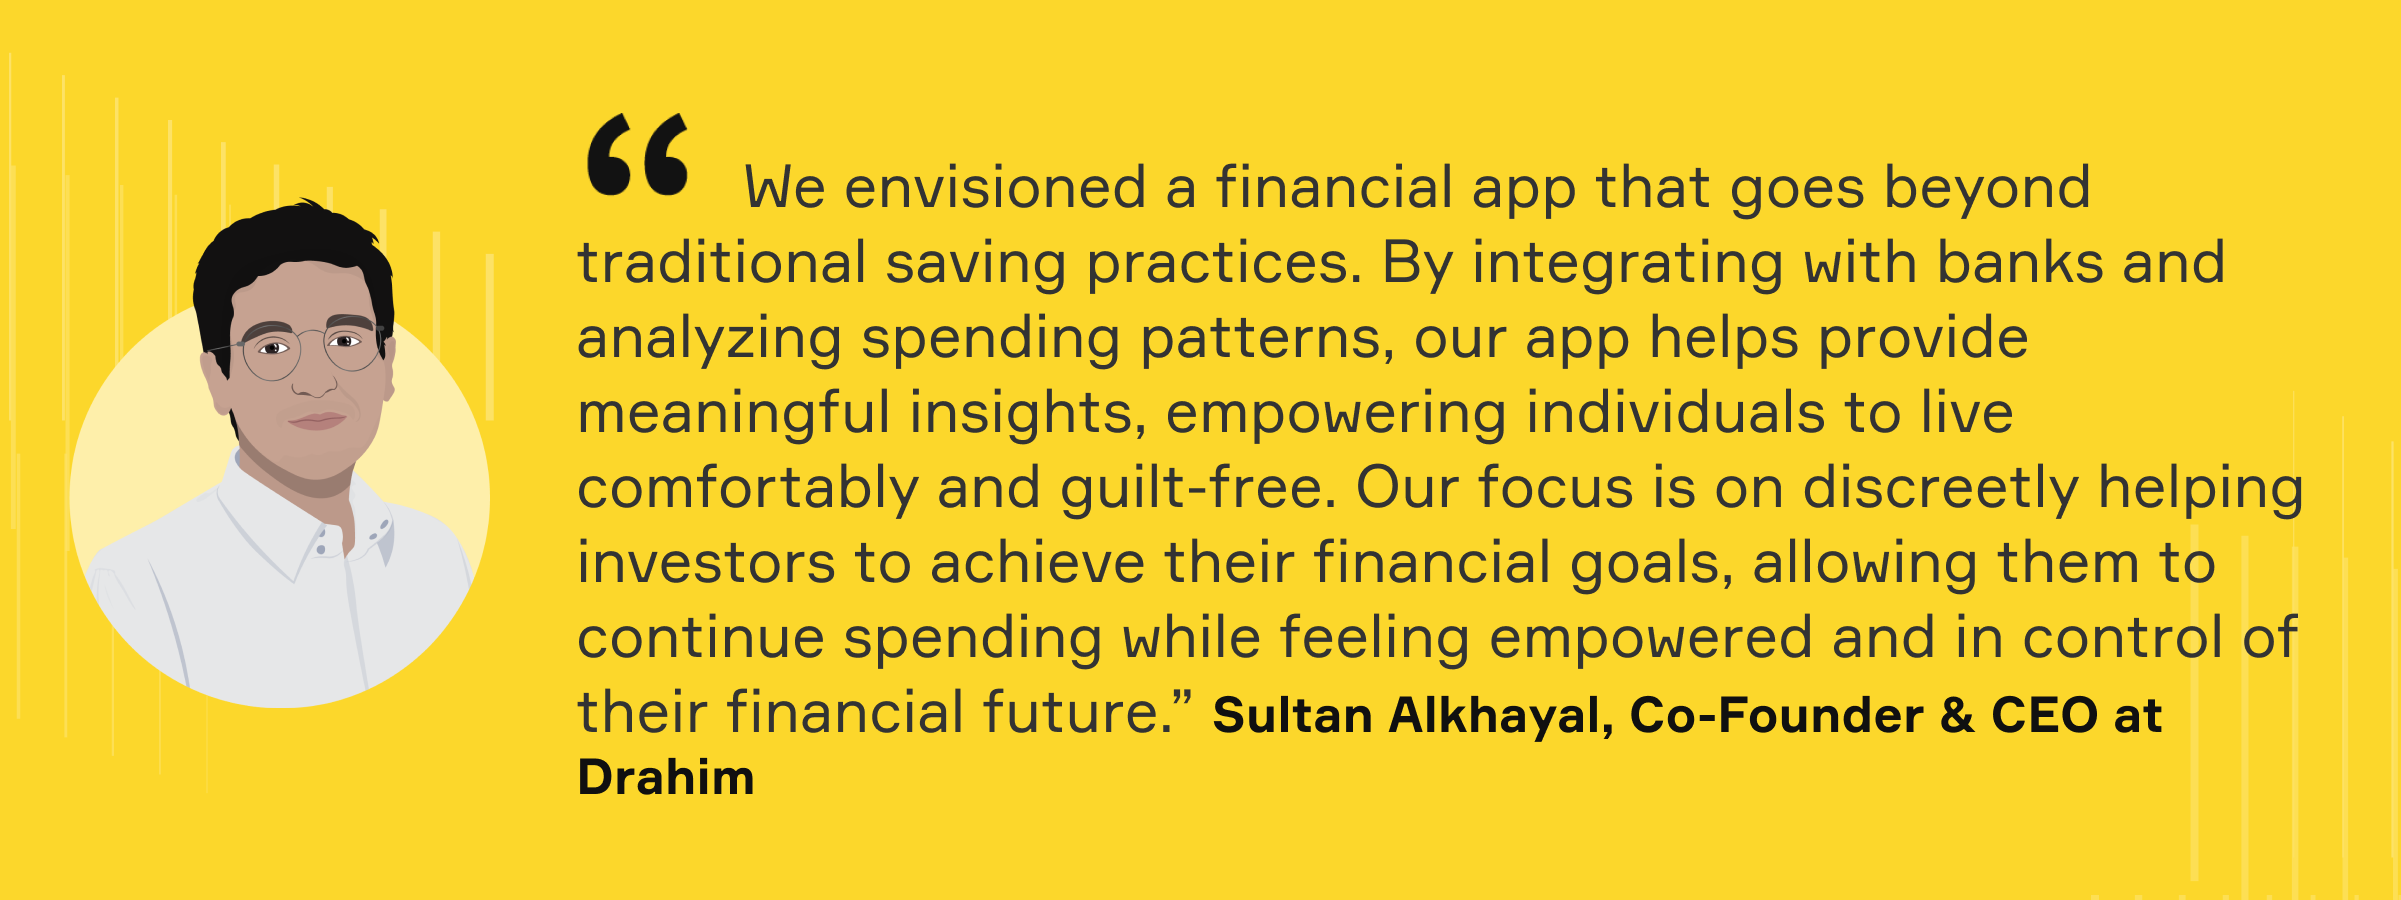 Drahim App Investments Partners with Alpaca to Transform Financial Management for Saudi Arabian Investors